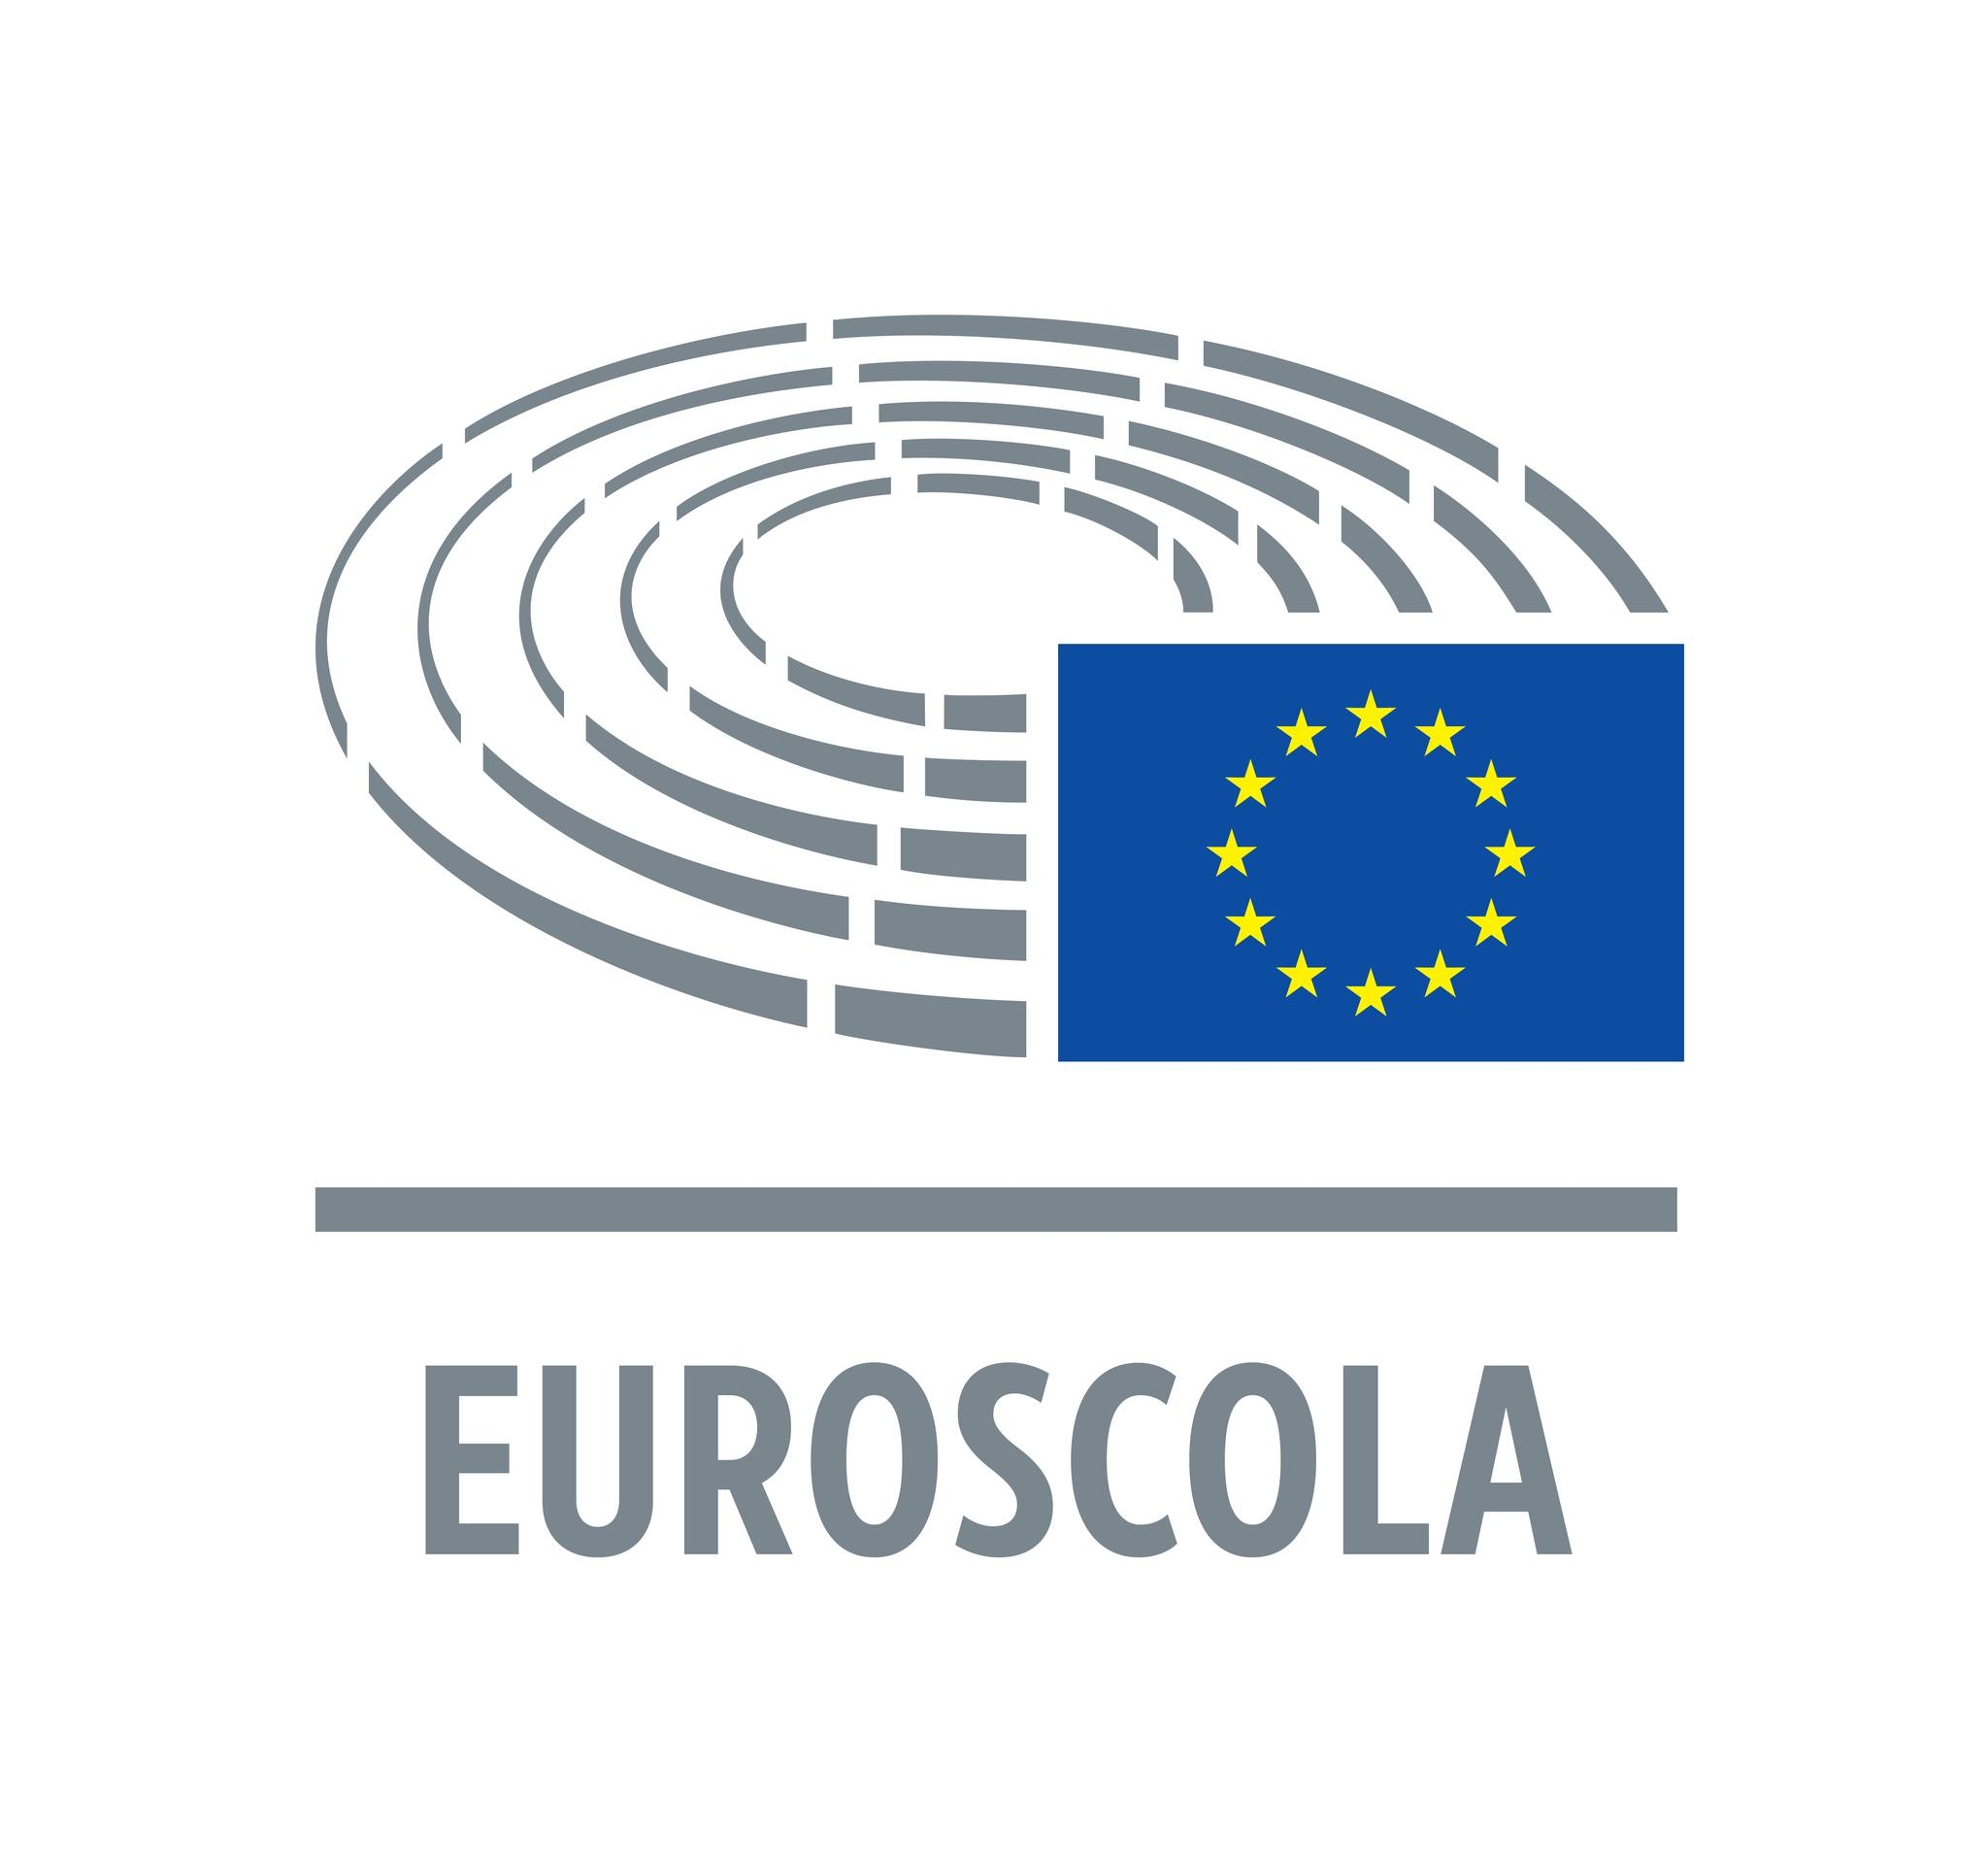 Candidaturas ao Concurso Euroscola abertas até ao dia 28 de fevereiro